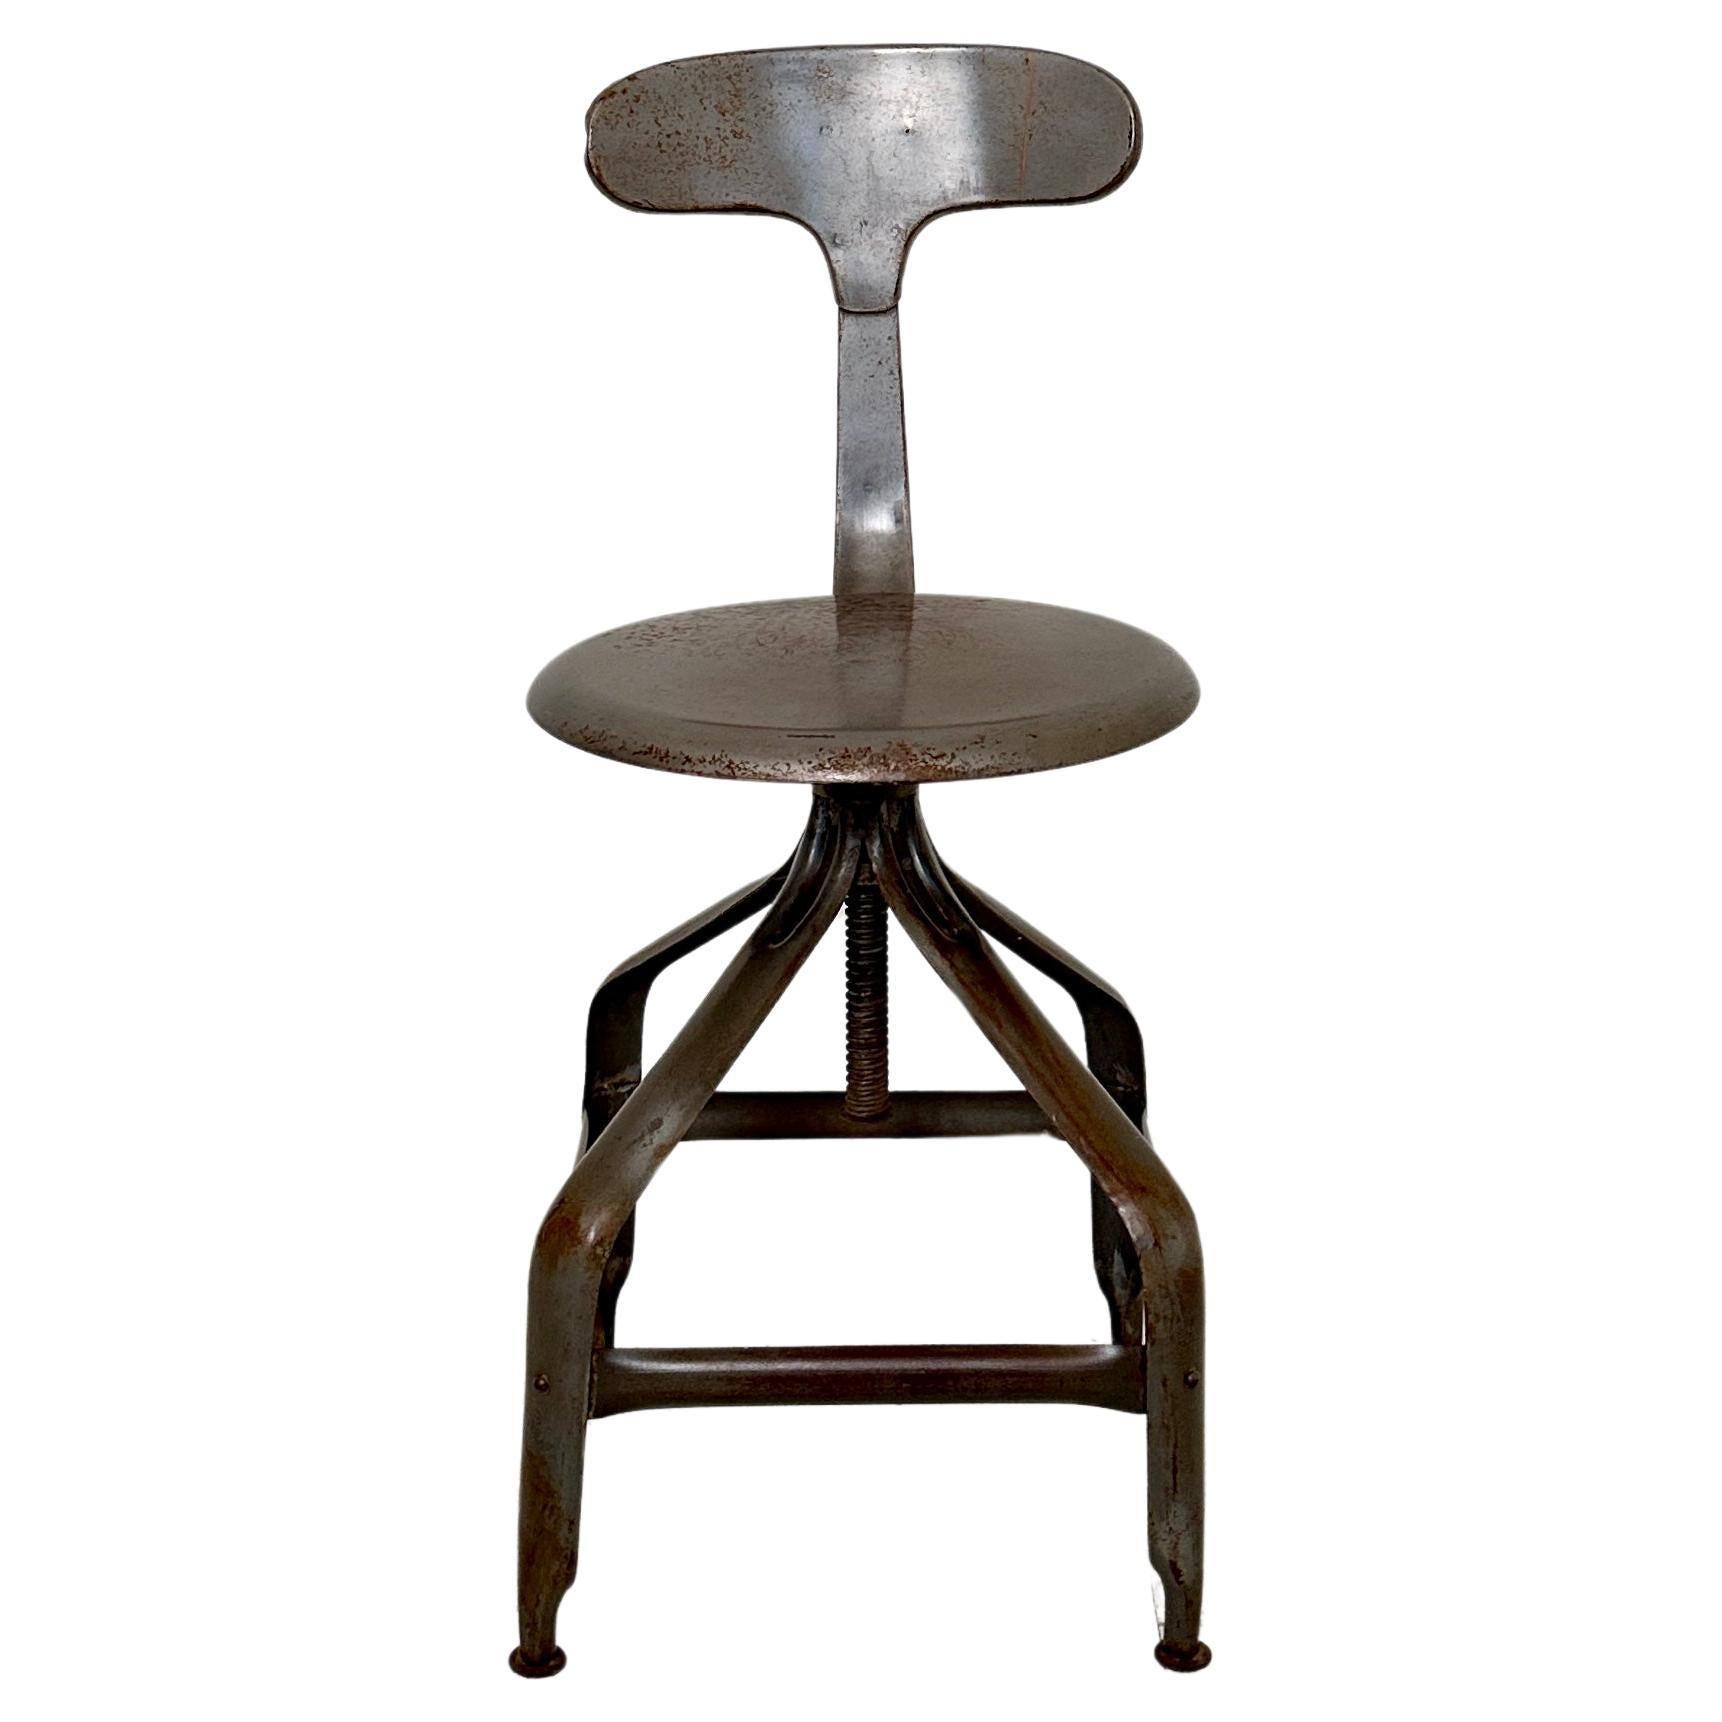 1950s Industrial Swivel Chair in Metal